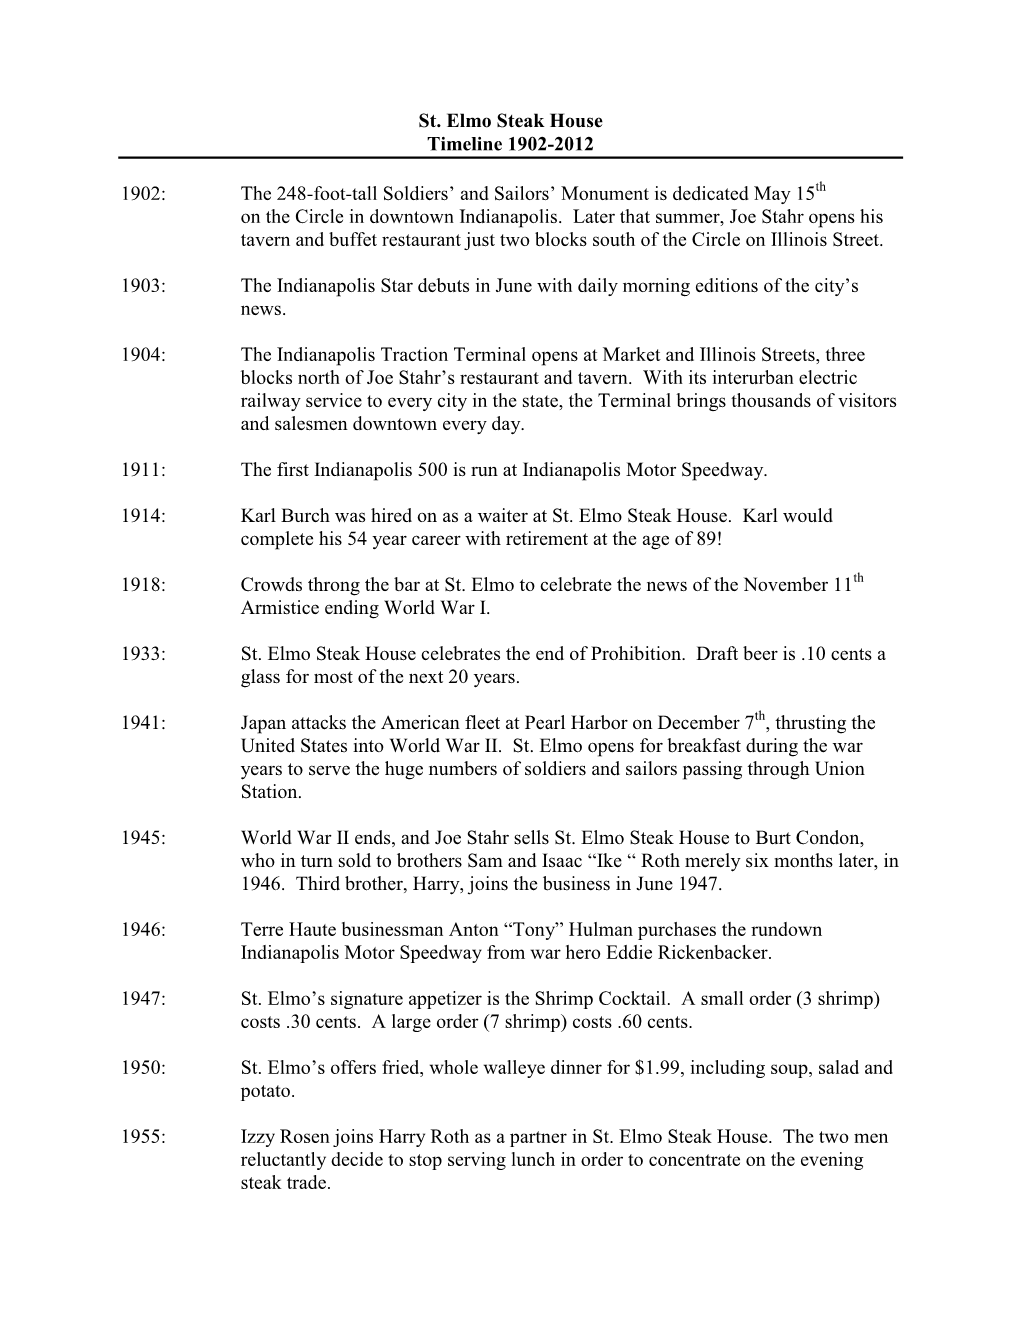 St. Elmo Steak House Timeline 1902-2012 1902